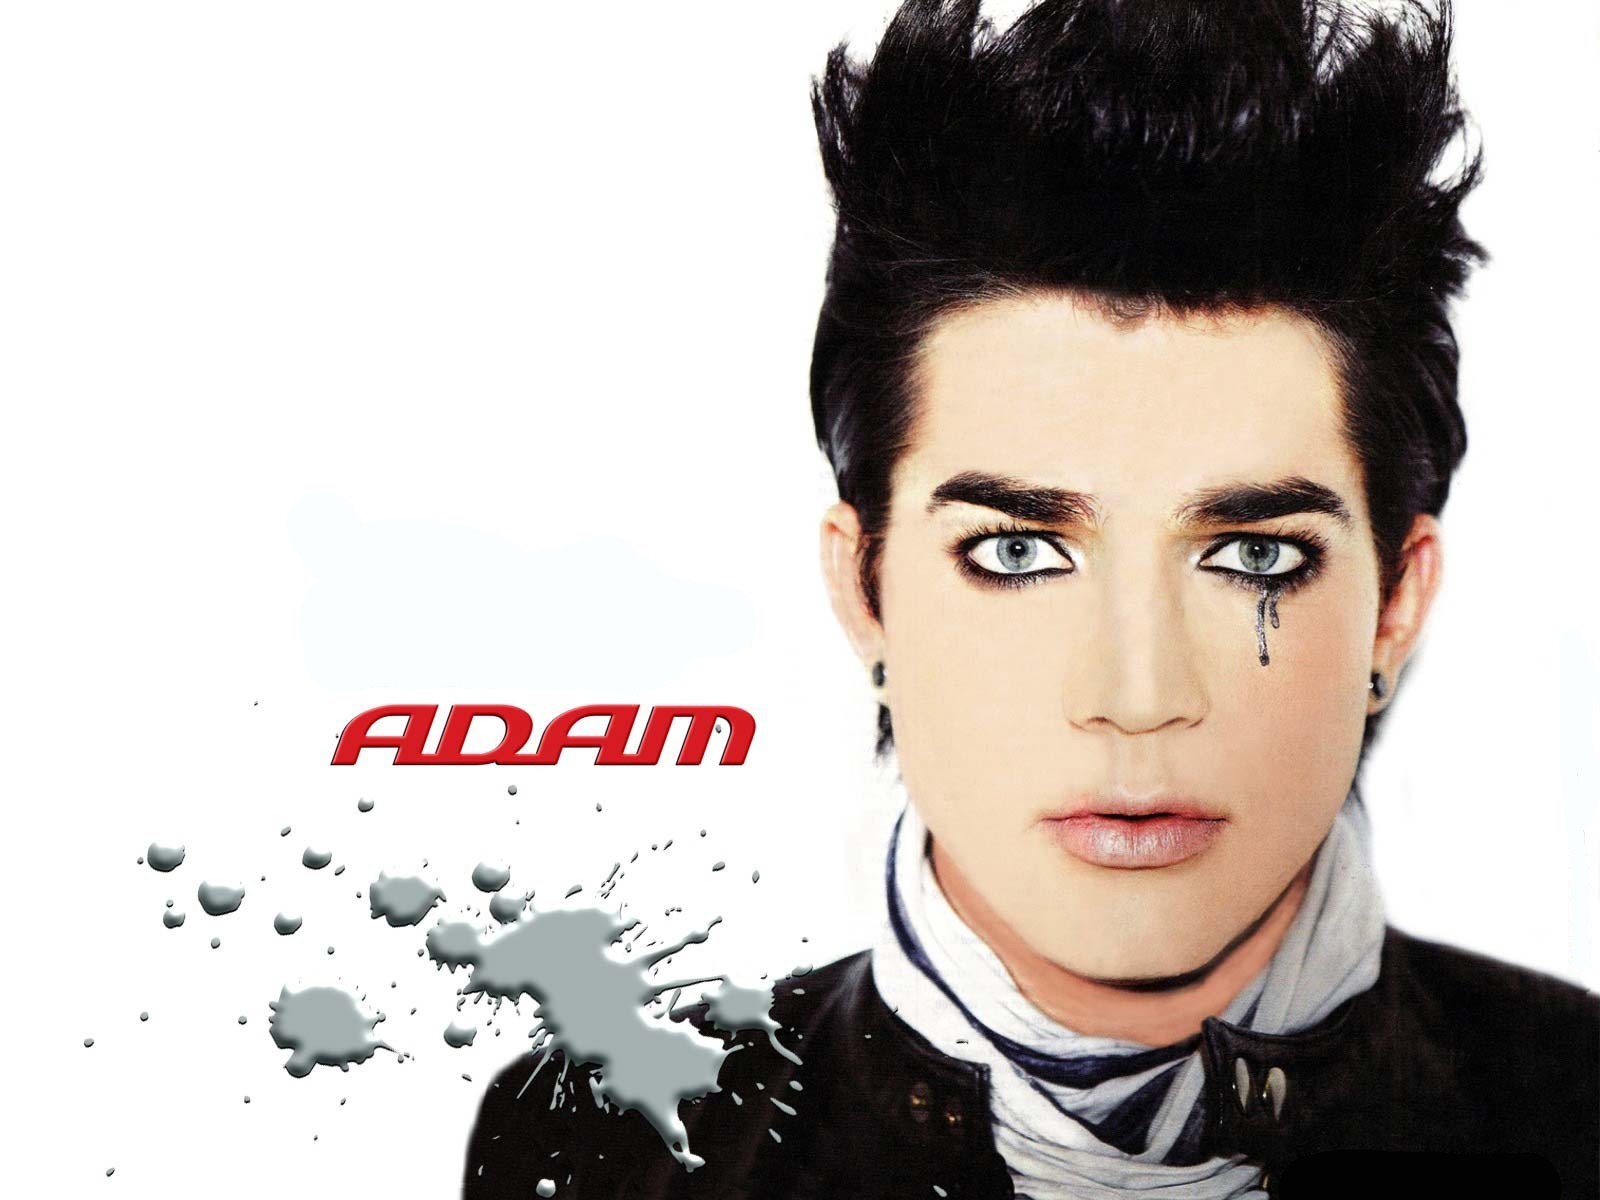 adam wallpaper,hair,face,forehead,eyebrow,album cover